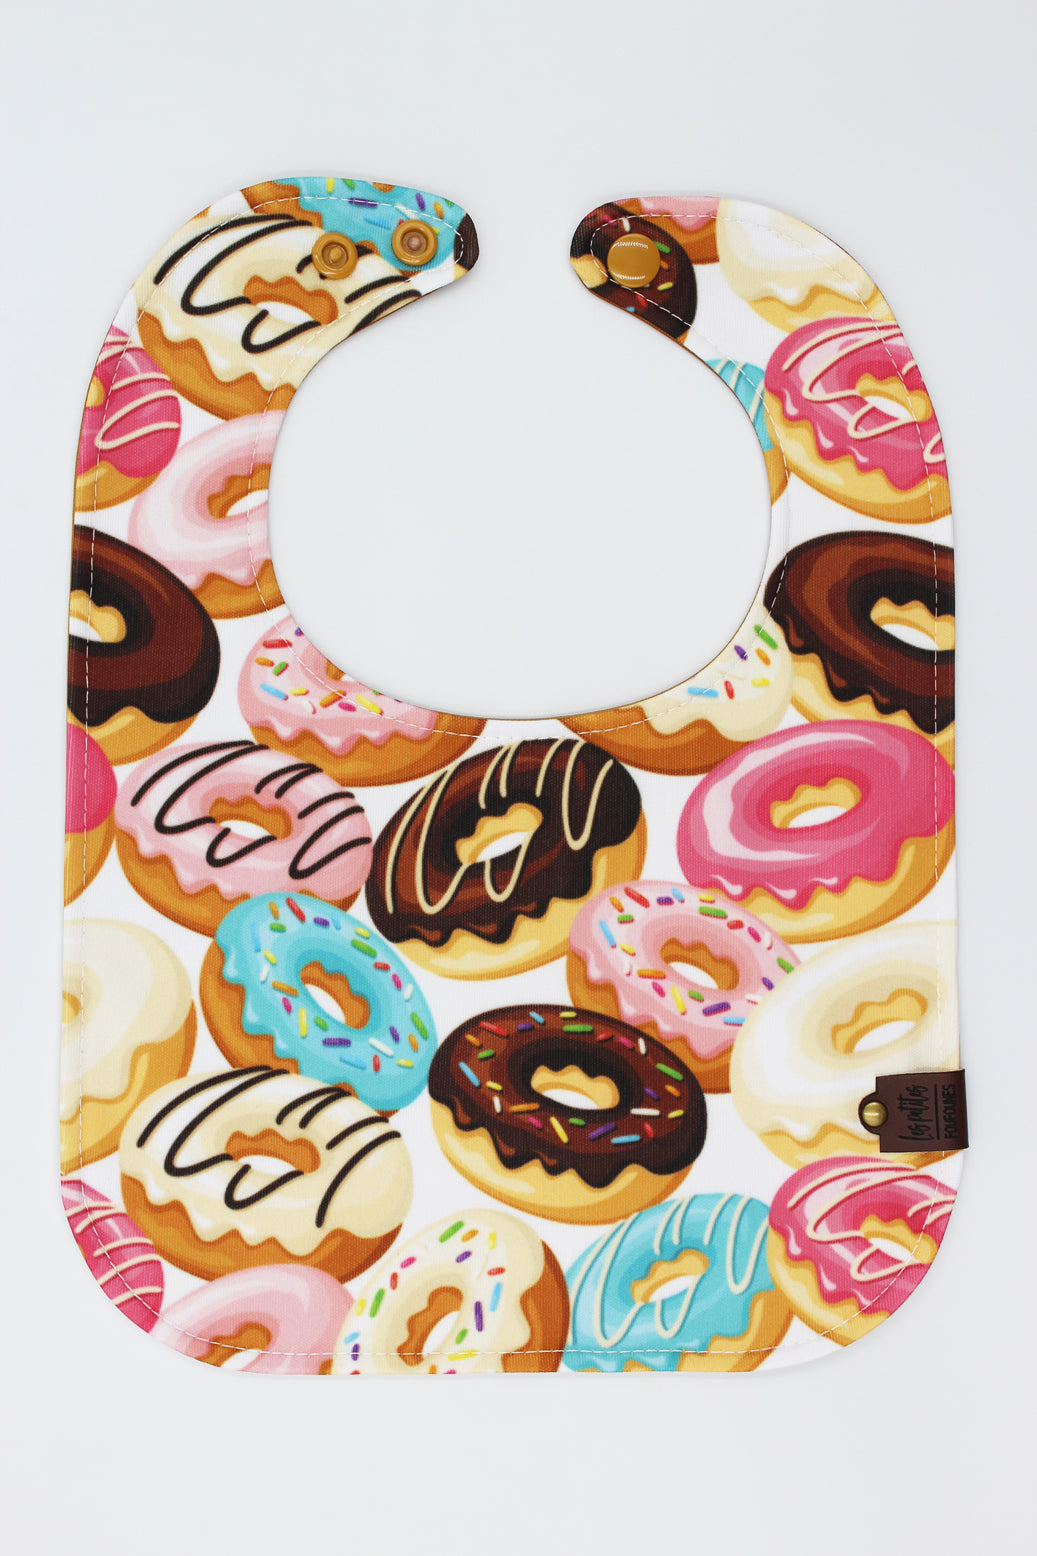 Bavette - Donuts (6901492777097)